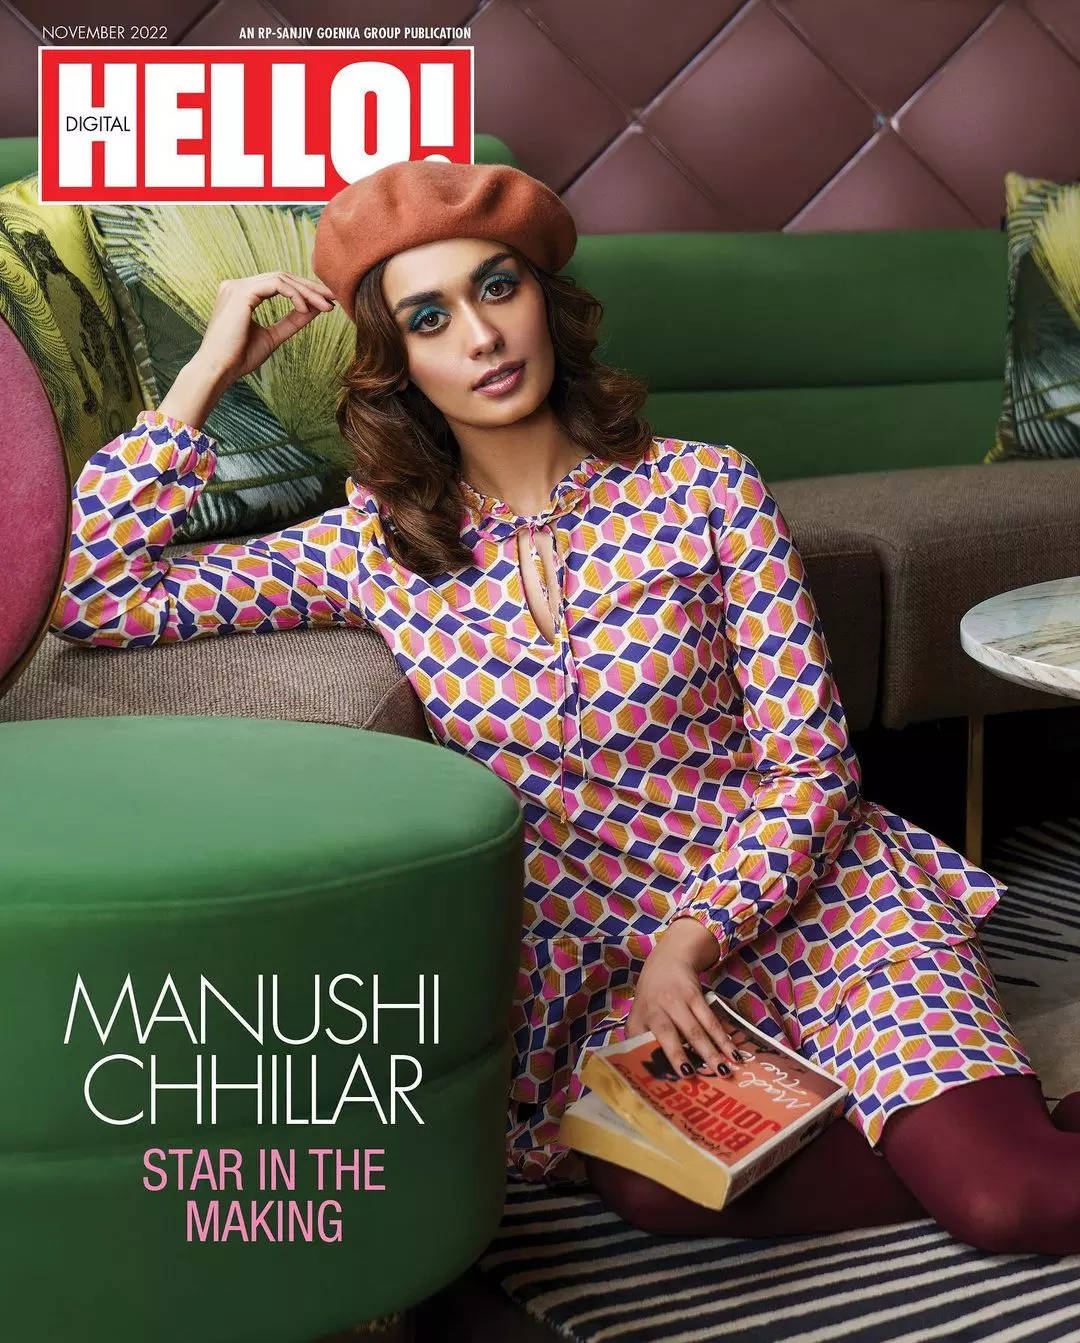 Manushi Chhillar graces the cover of 'Hello' magazine